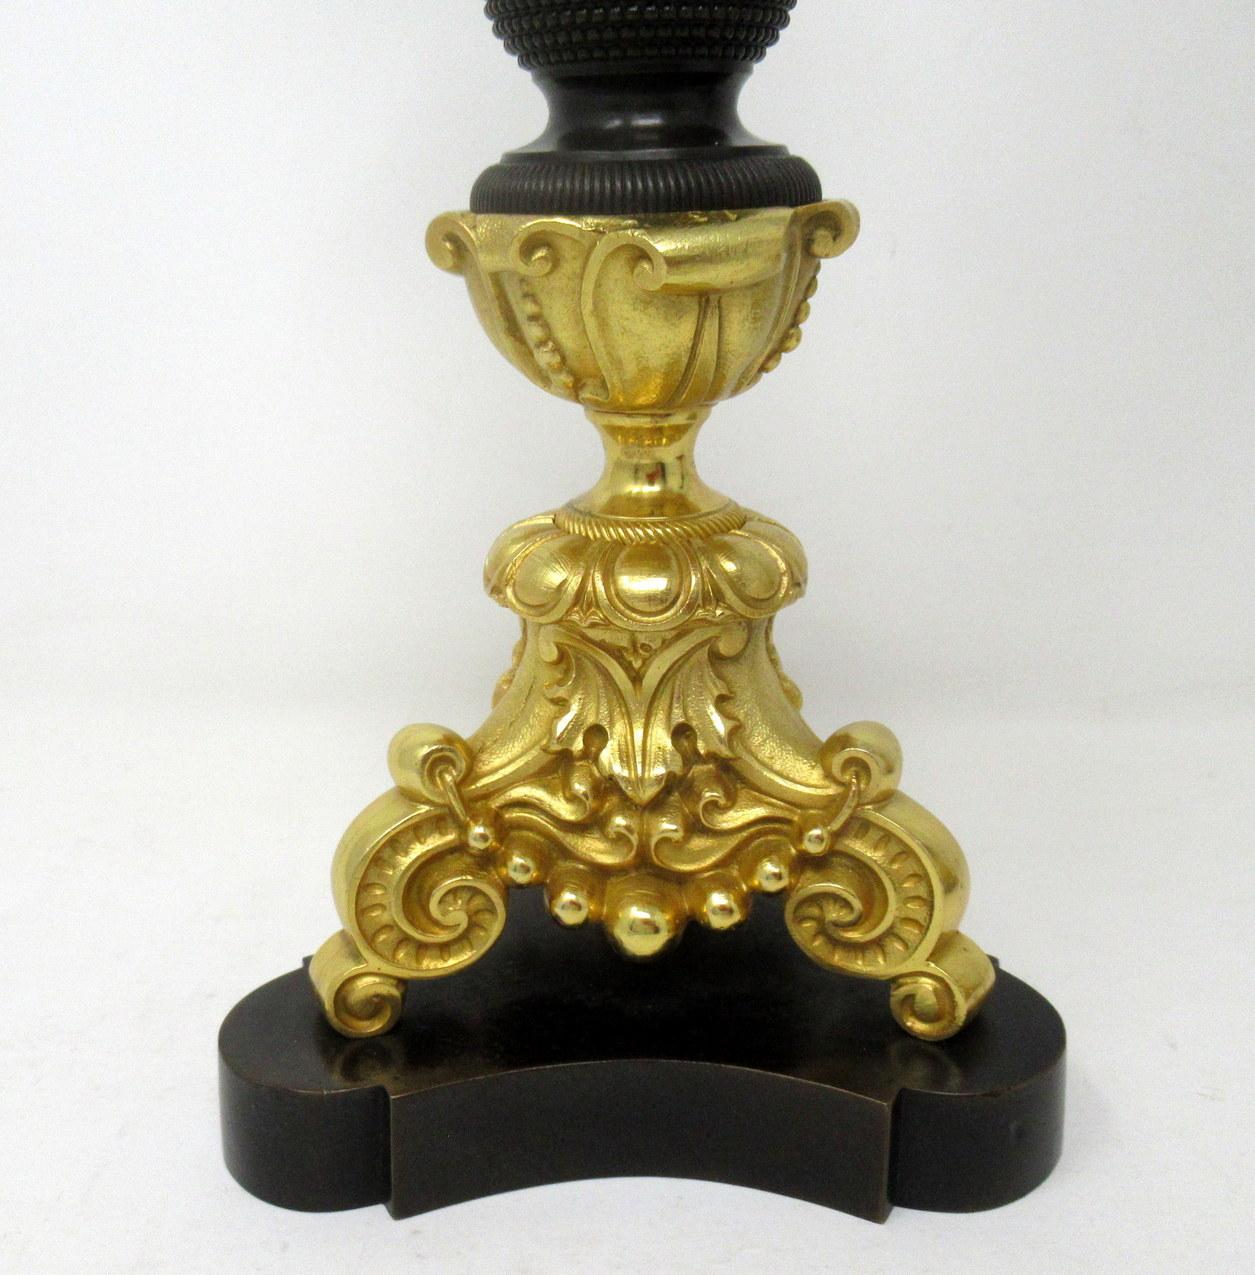 19th Century Antique Pair of French Empire Ormolu Patinated Bronze Dore Candlesticks Regency